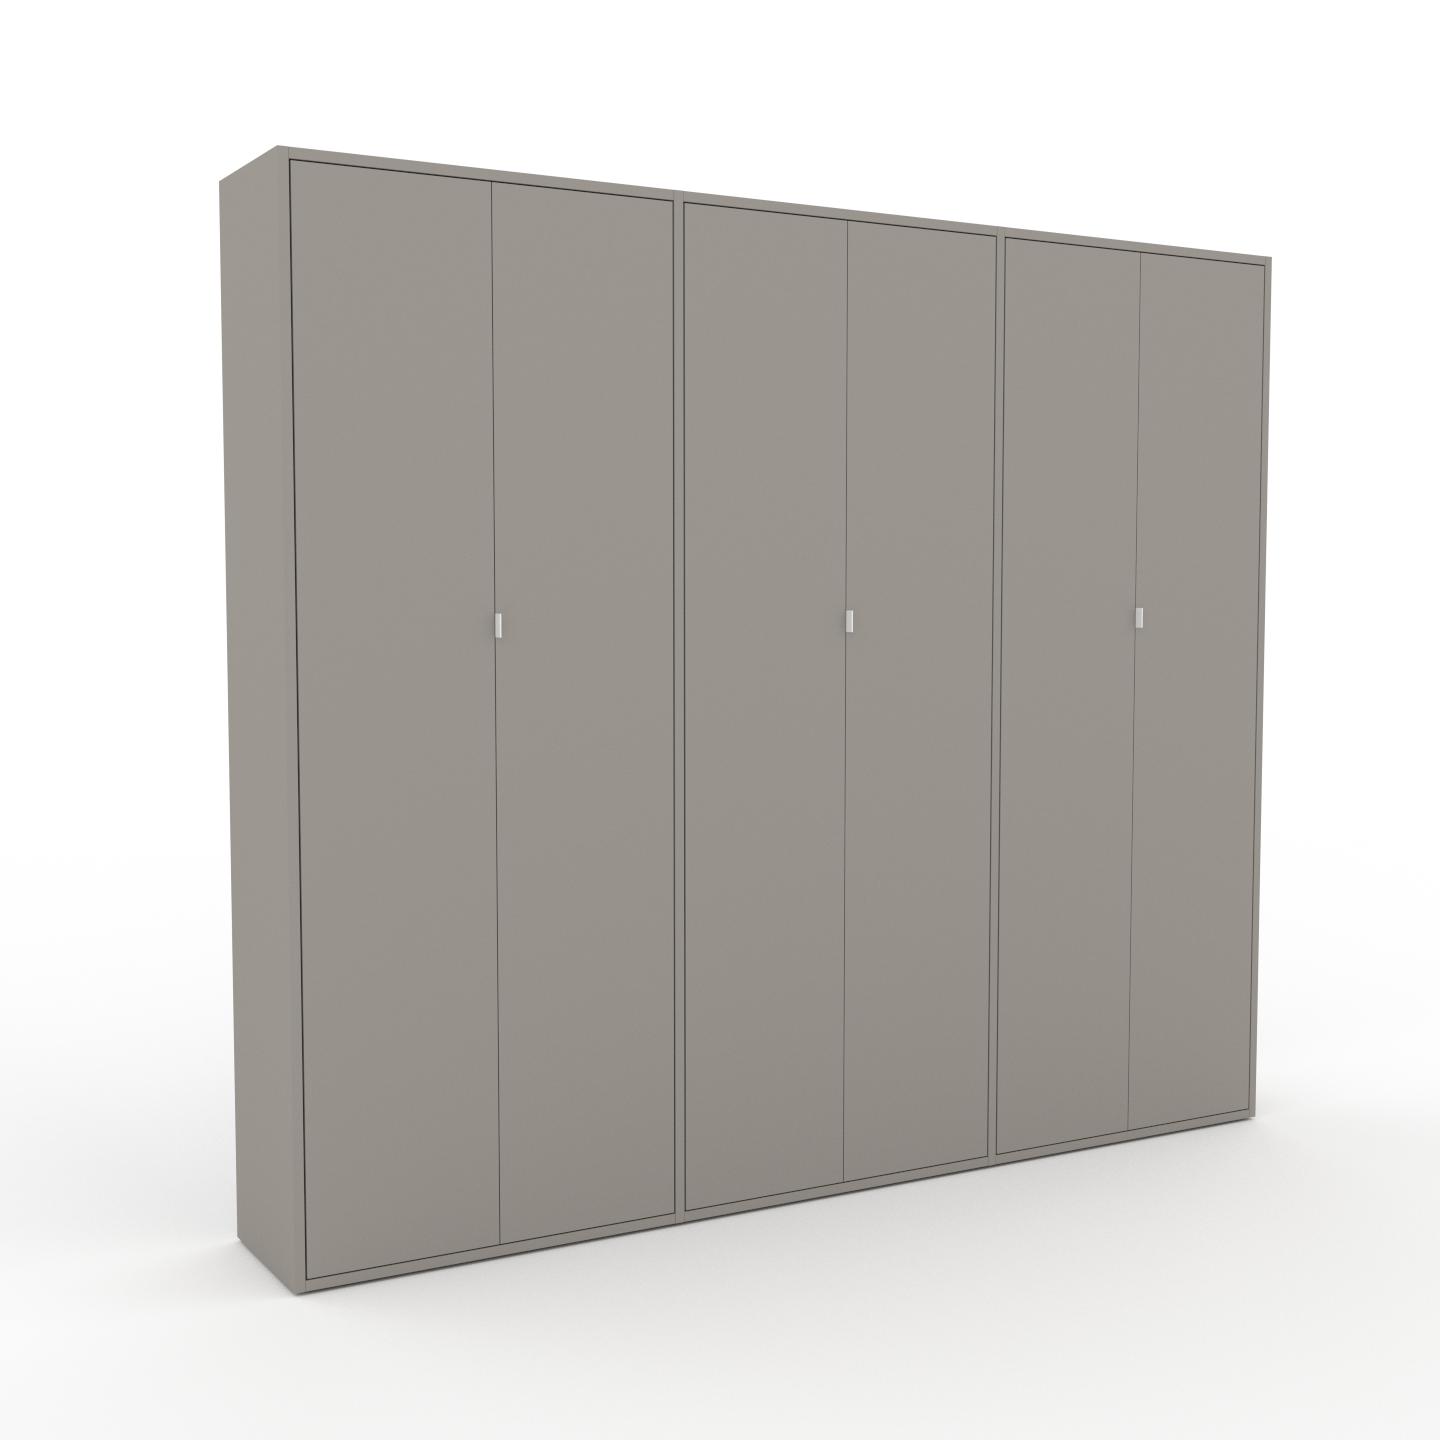 MYCS Bücherregal Sandgrau - Modernes Regal für Bücher: Türen in Sandgrau - 226 x 195 x 35 cm, Individuell konfigurierbar